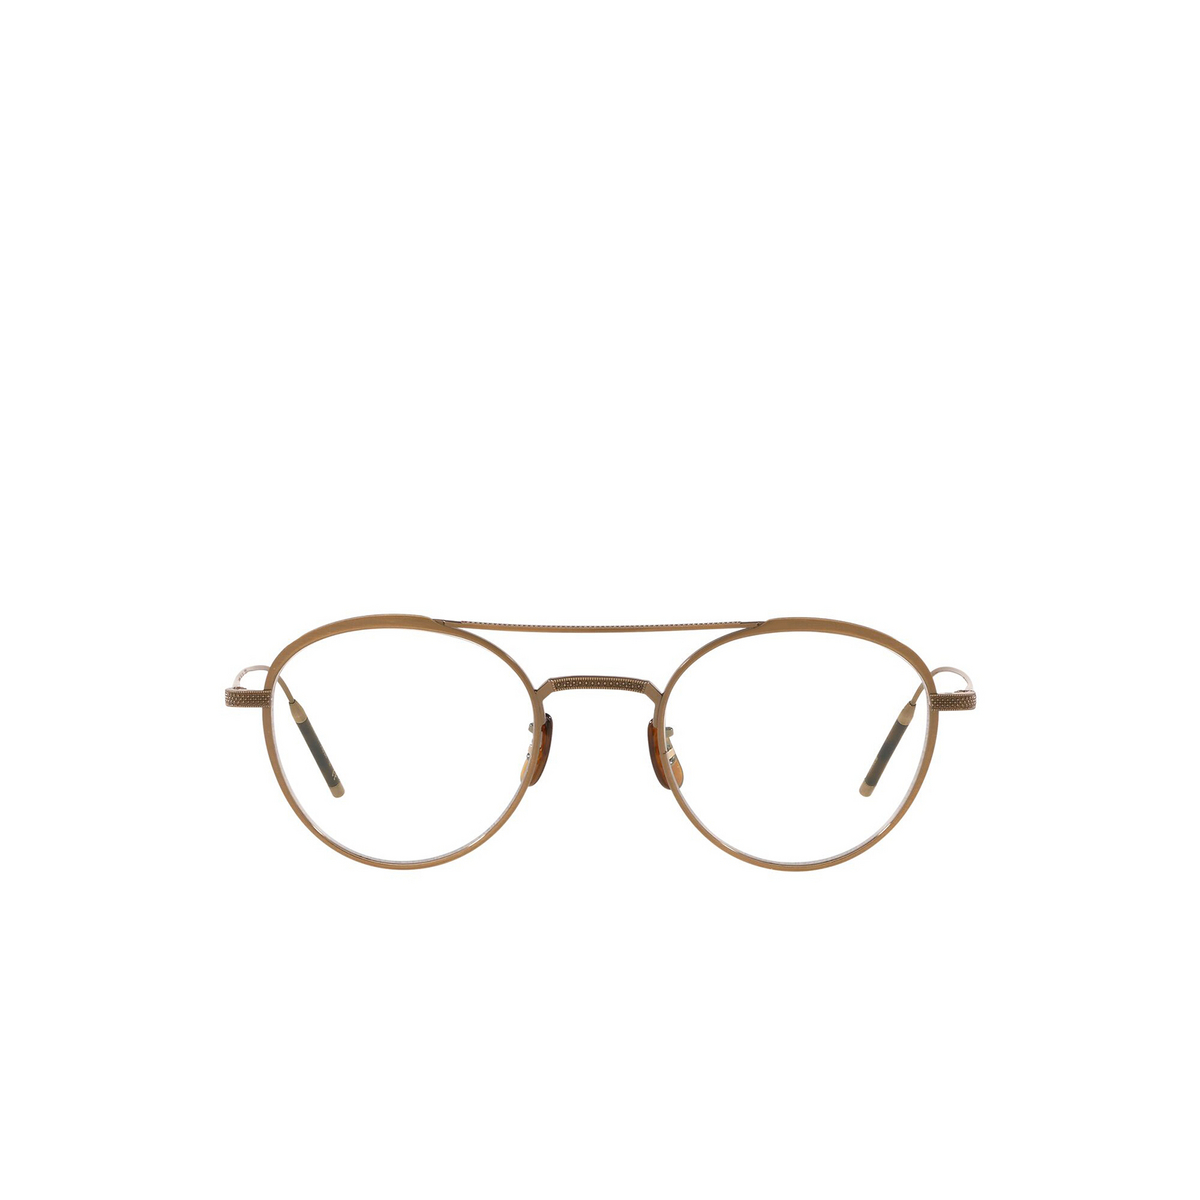 Oliver Peoples® Round Eyeglasses: Tk-2 OV1275T color Antique Gold 5284 - front view.